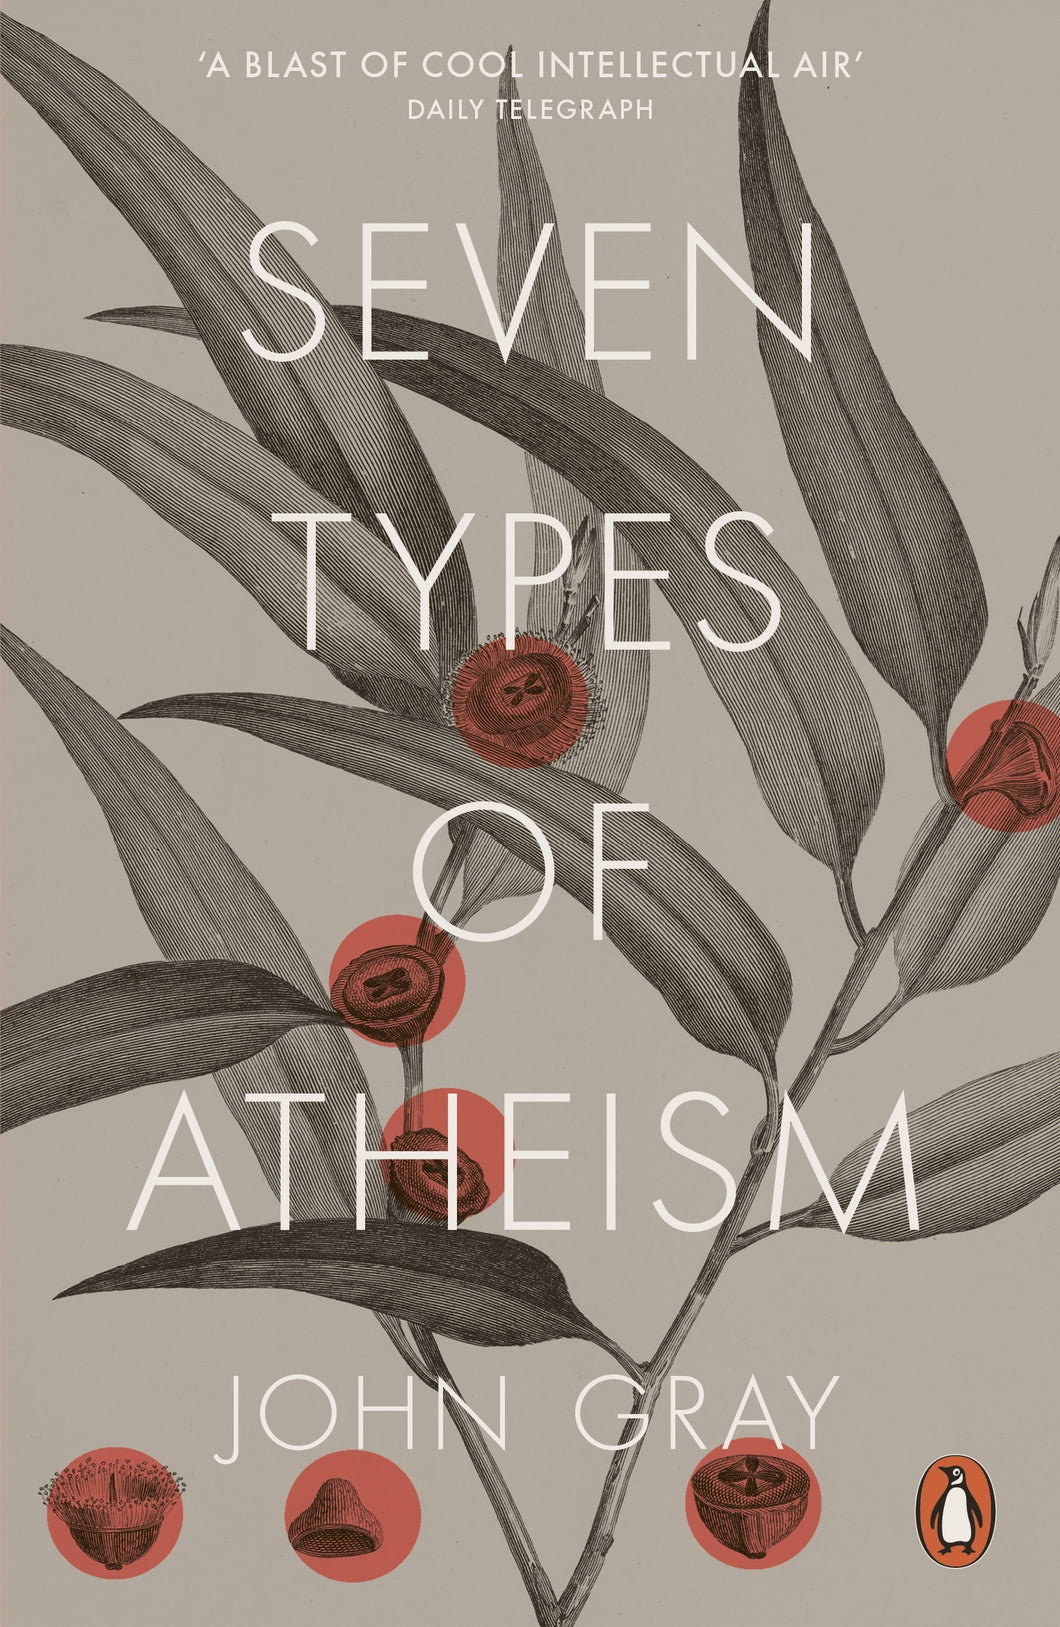 Seven Types of Atheism ร้านหนังสือและสิ่งของ เป็นร้านหนังสือภาษาอังกฤษหายาก และร้านกาแฟ หรือ บุ๊คคาเฟ่ ตั้งอยู่สุขุมวิท กรุงเทพ